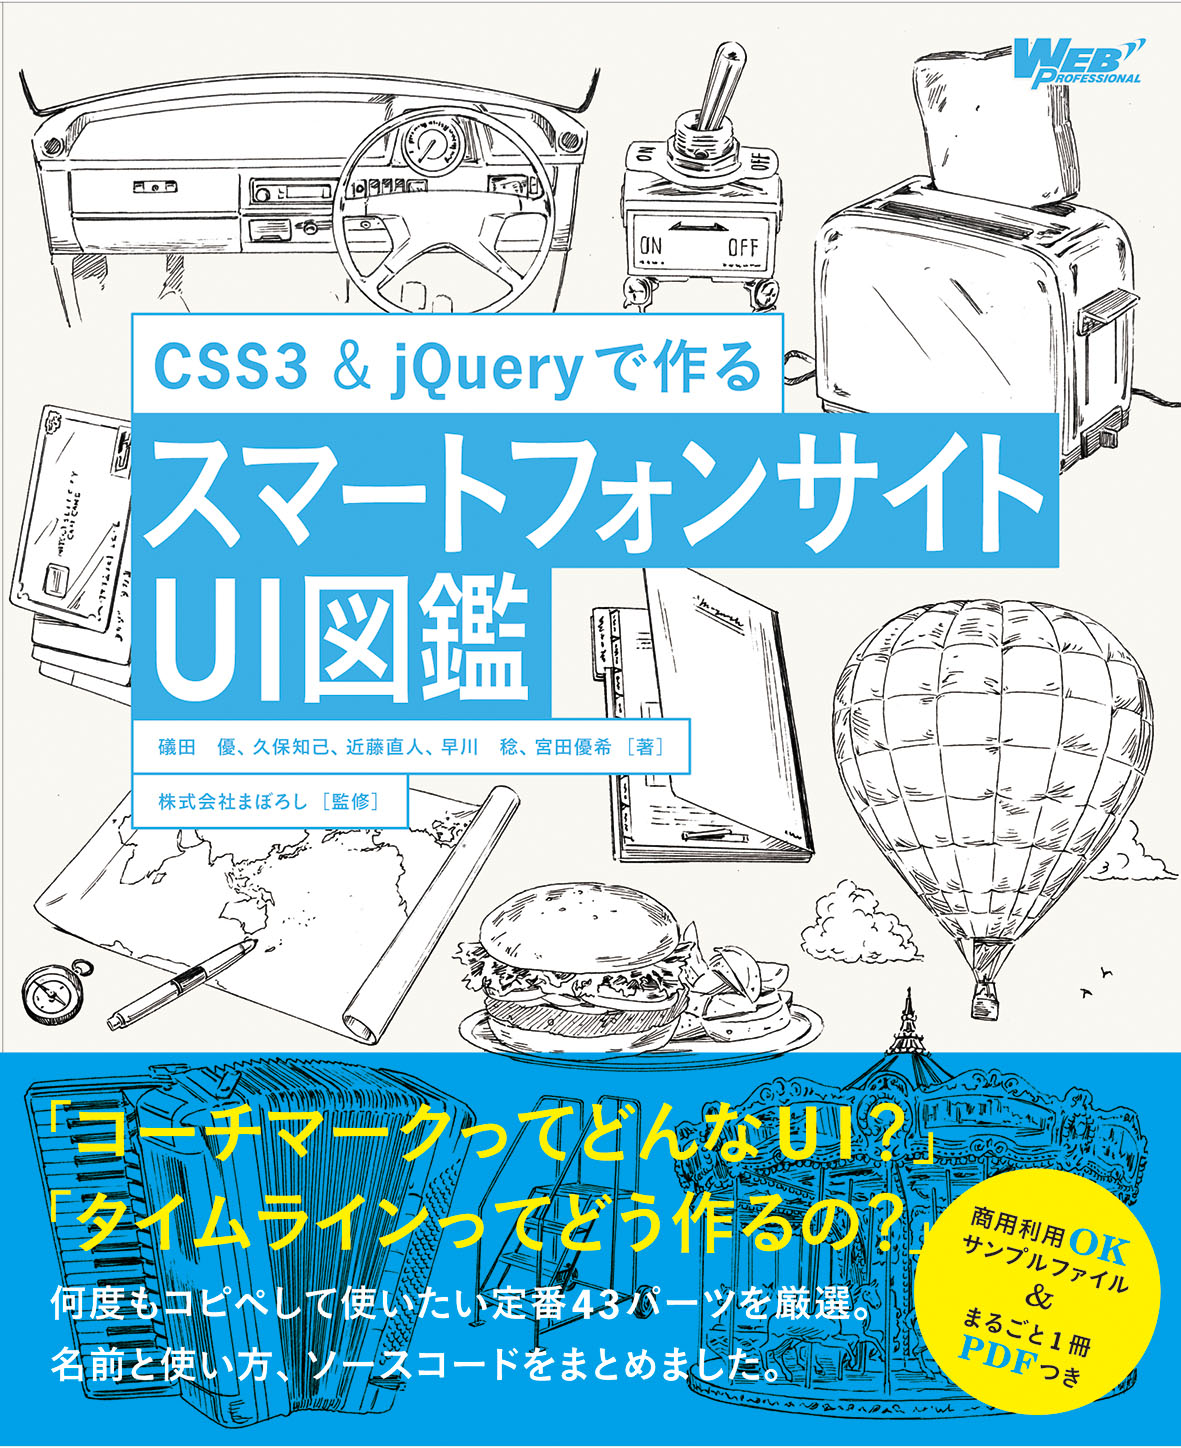 『CSS3&jQueryで作る スマートフォンサイトUI図鑑』